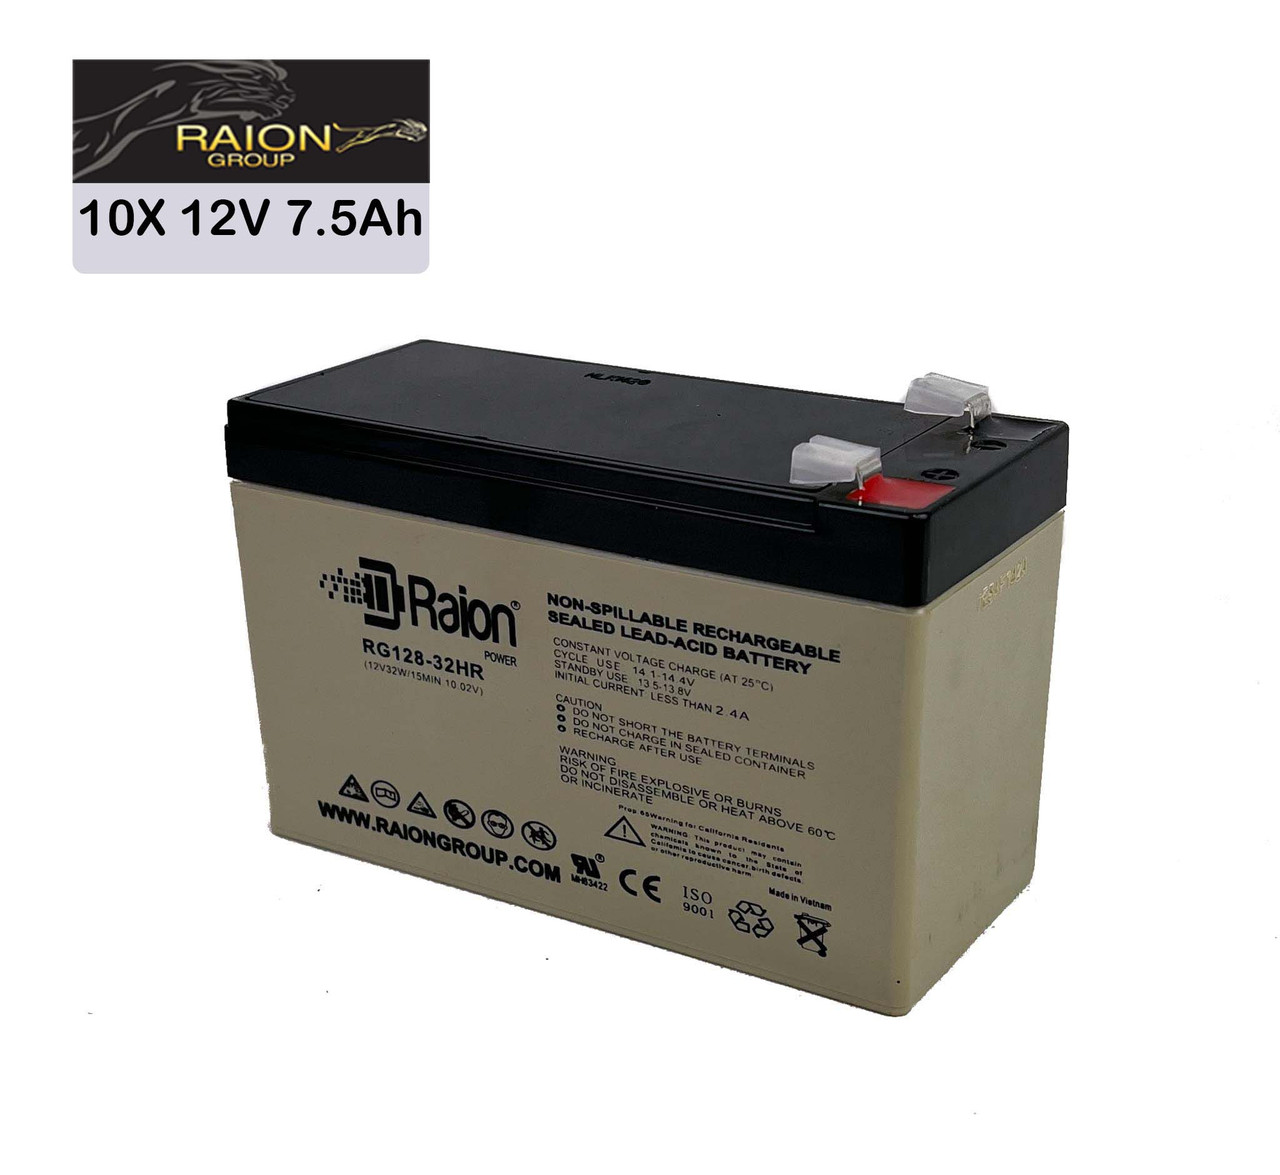 Raion Power 12V 7.5Ah High Rate Discharge UPS Batteries for Minuteman BP120V6.5i - 10 Pack